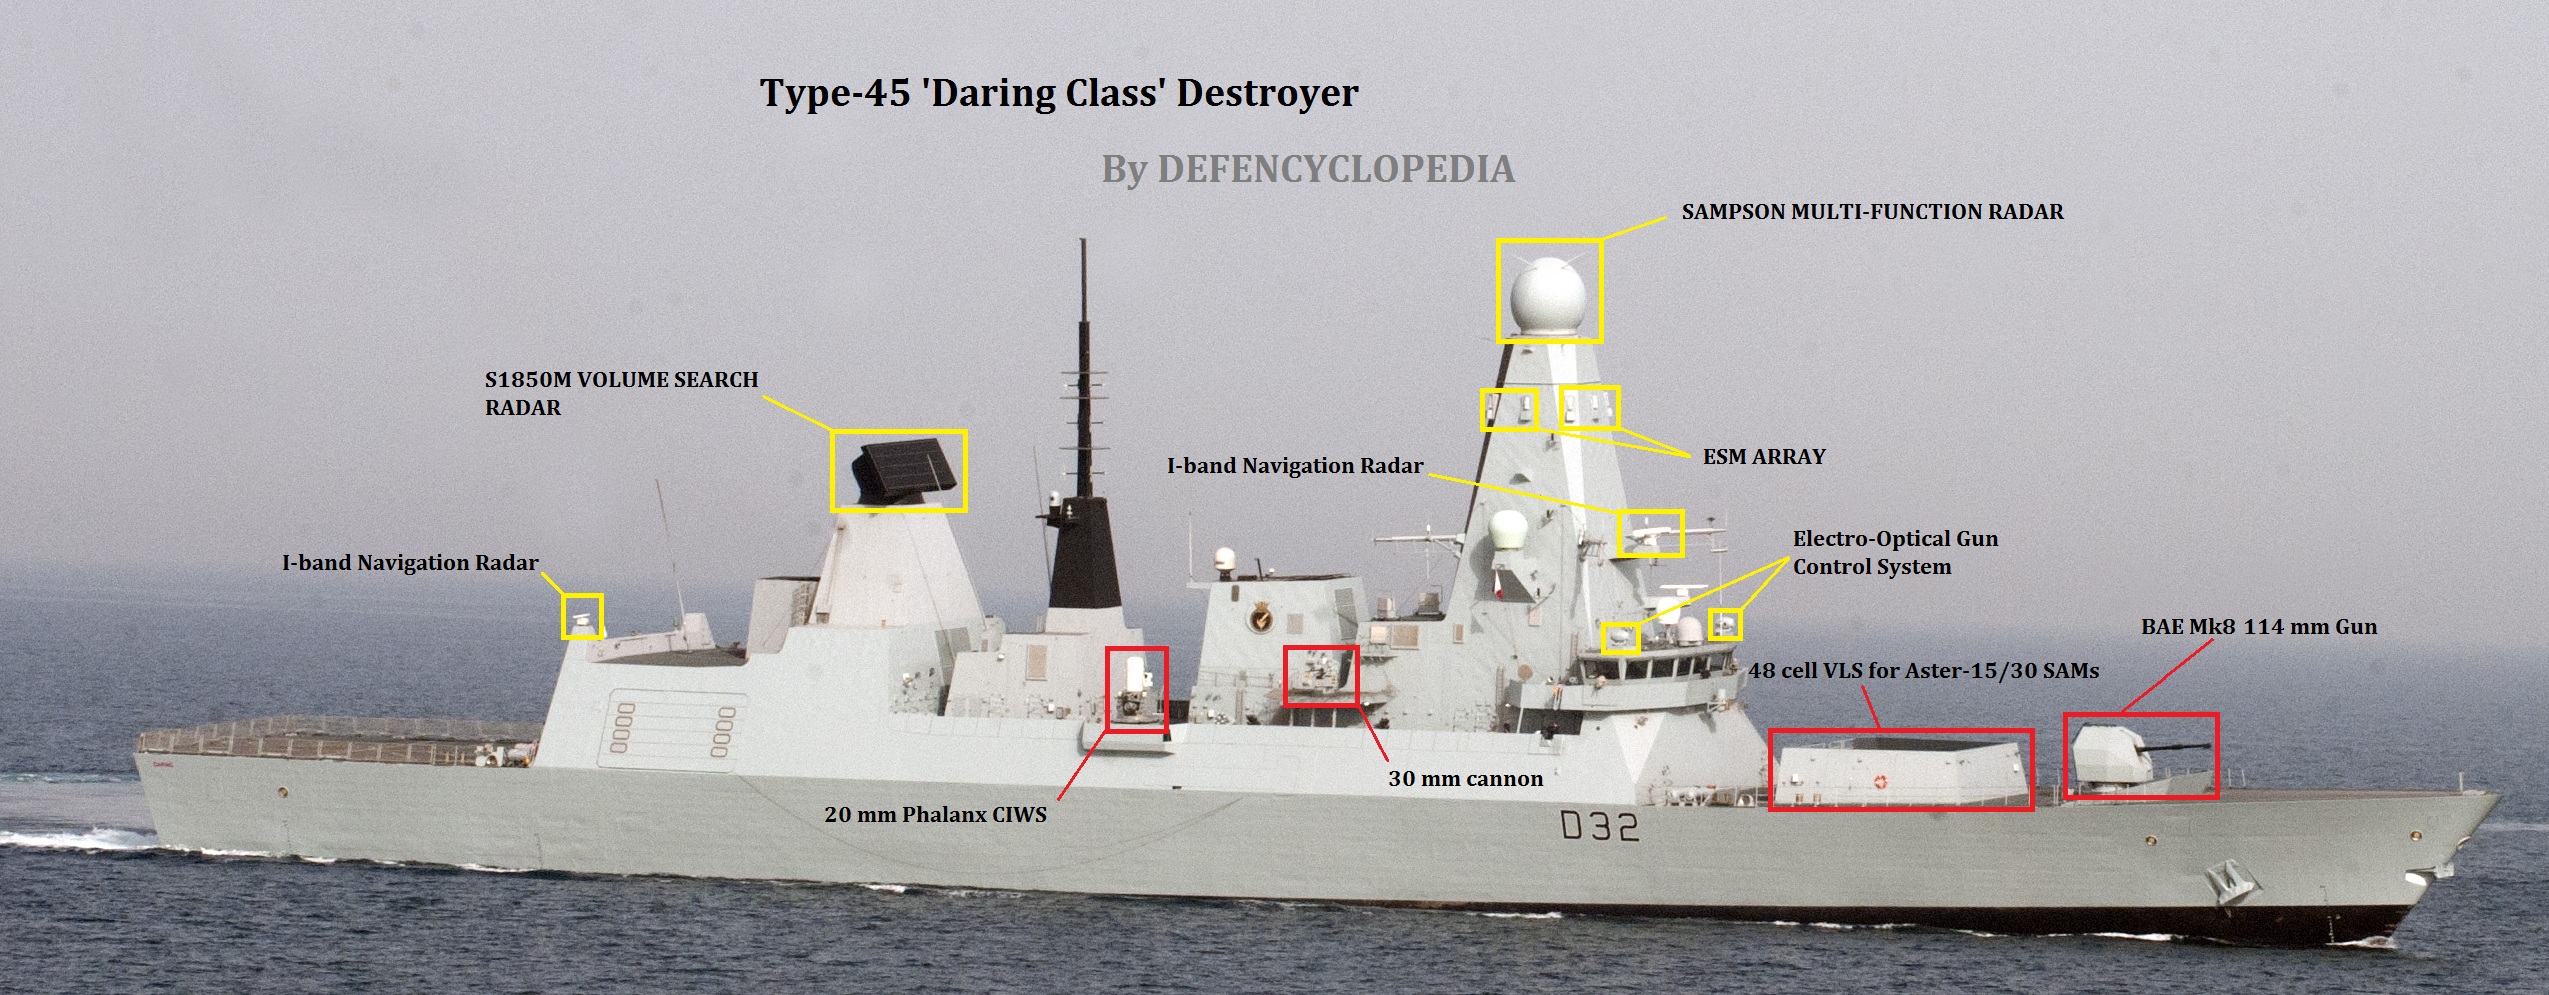 120416-n-pk218-028_royal_navy_destroyer_hms_daring_d_32.jpg